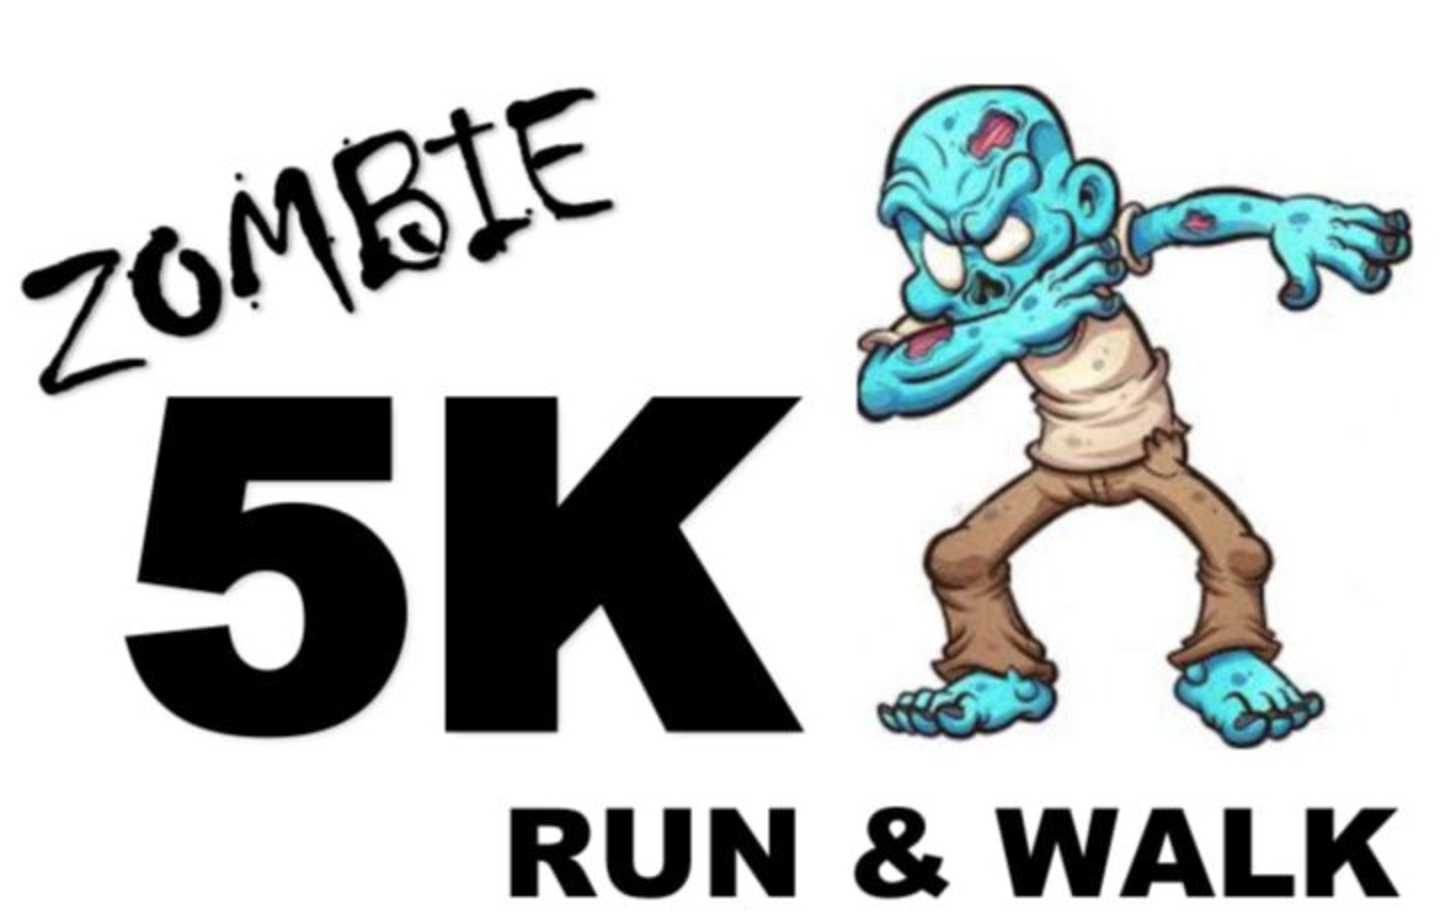 Zombie 5K Run & Walk logo on RaceRaves